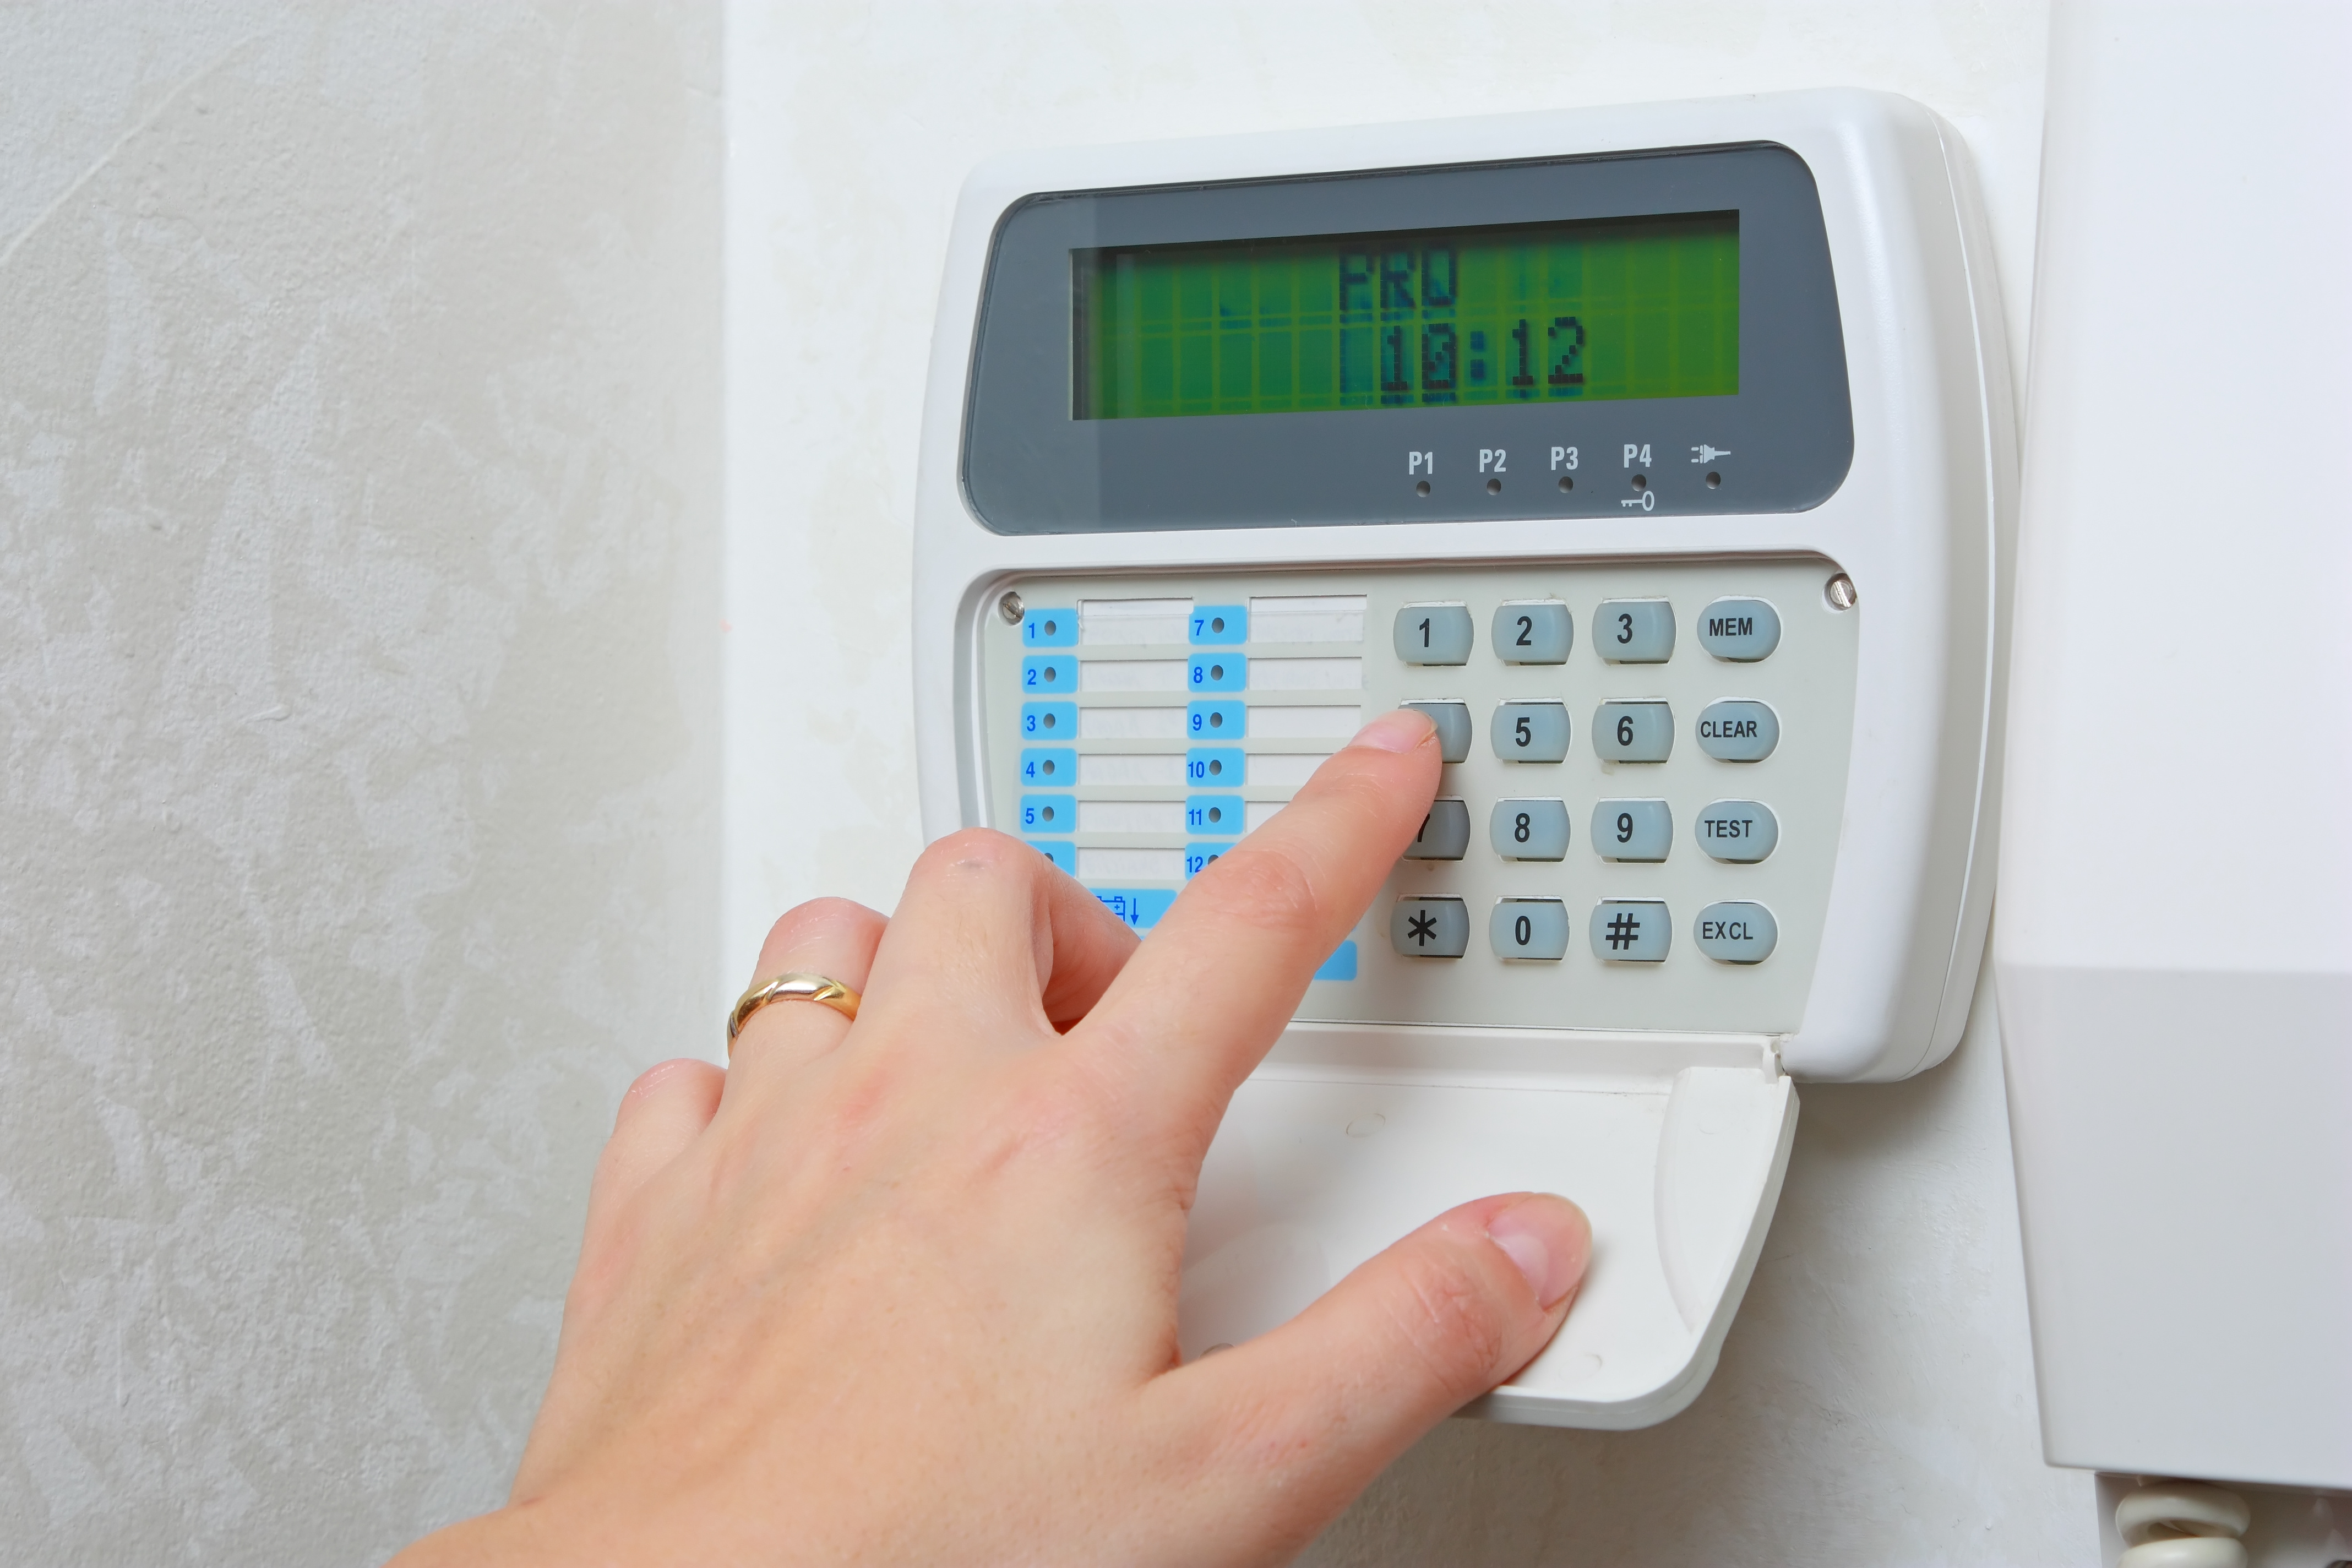 Alarm install. Охранная сигнализация для дома. Домашняя сигнализация охранная. Охранная сигнализация для дачи. GSM сигнализация для дачи.